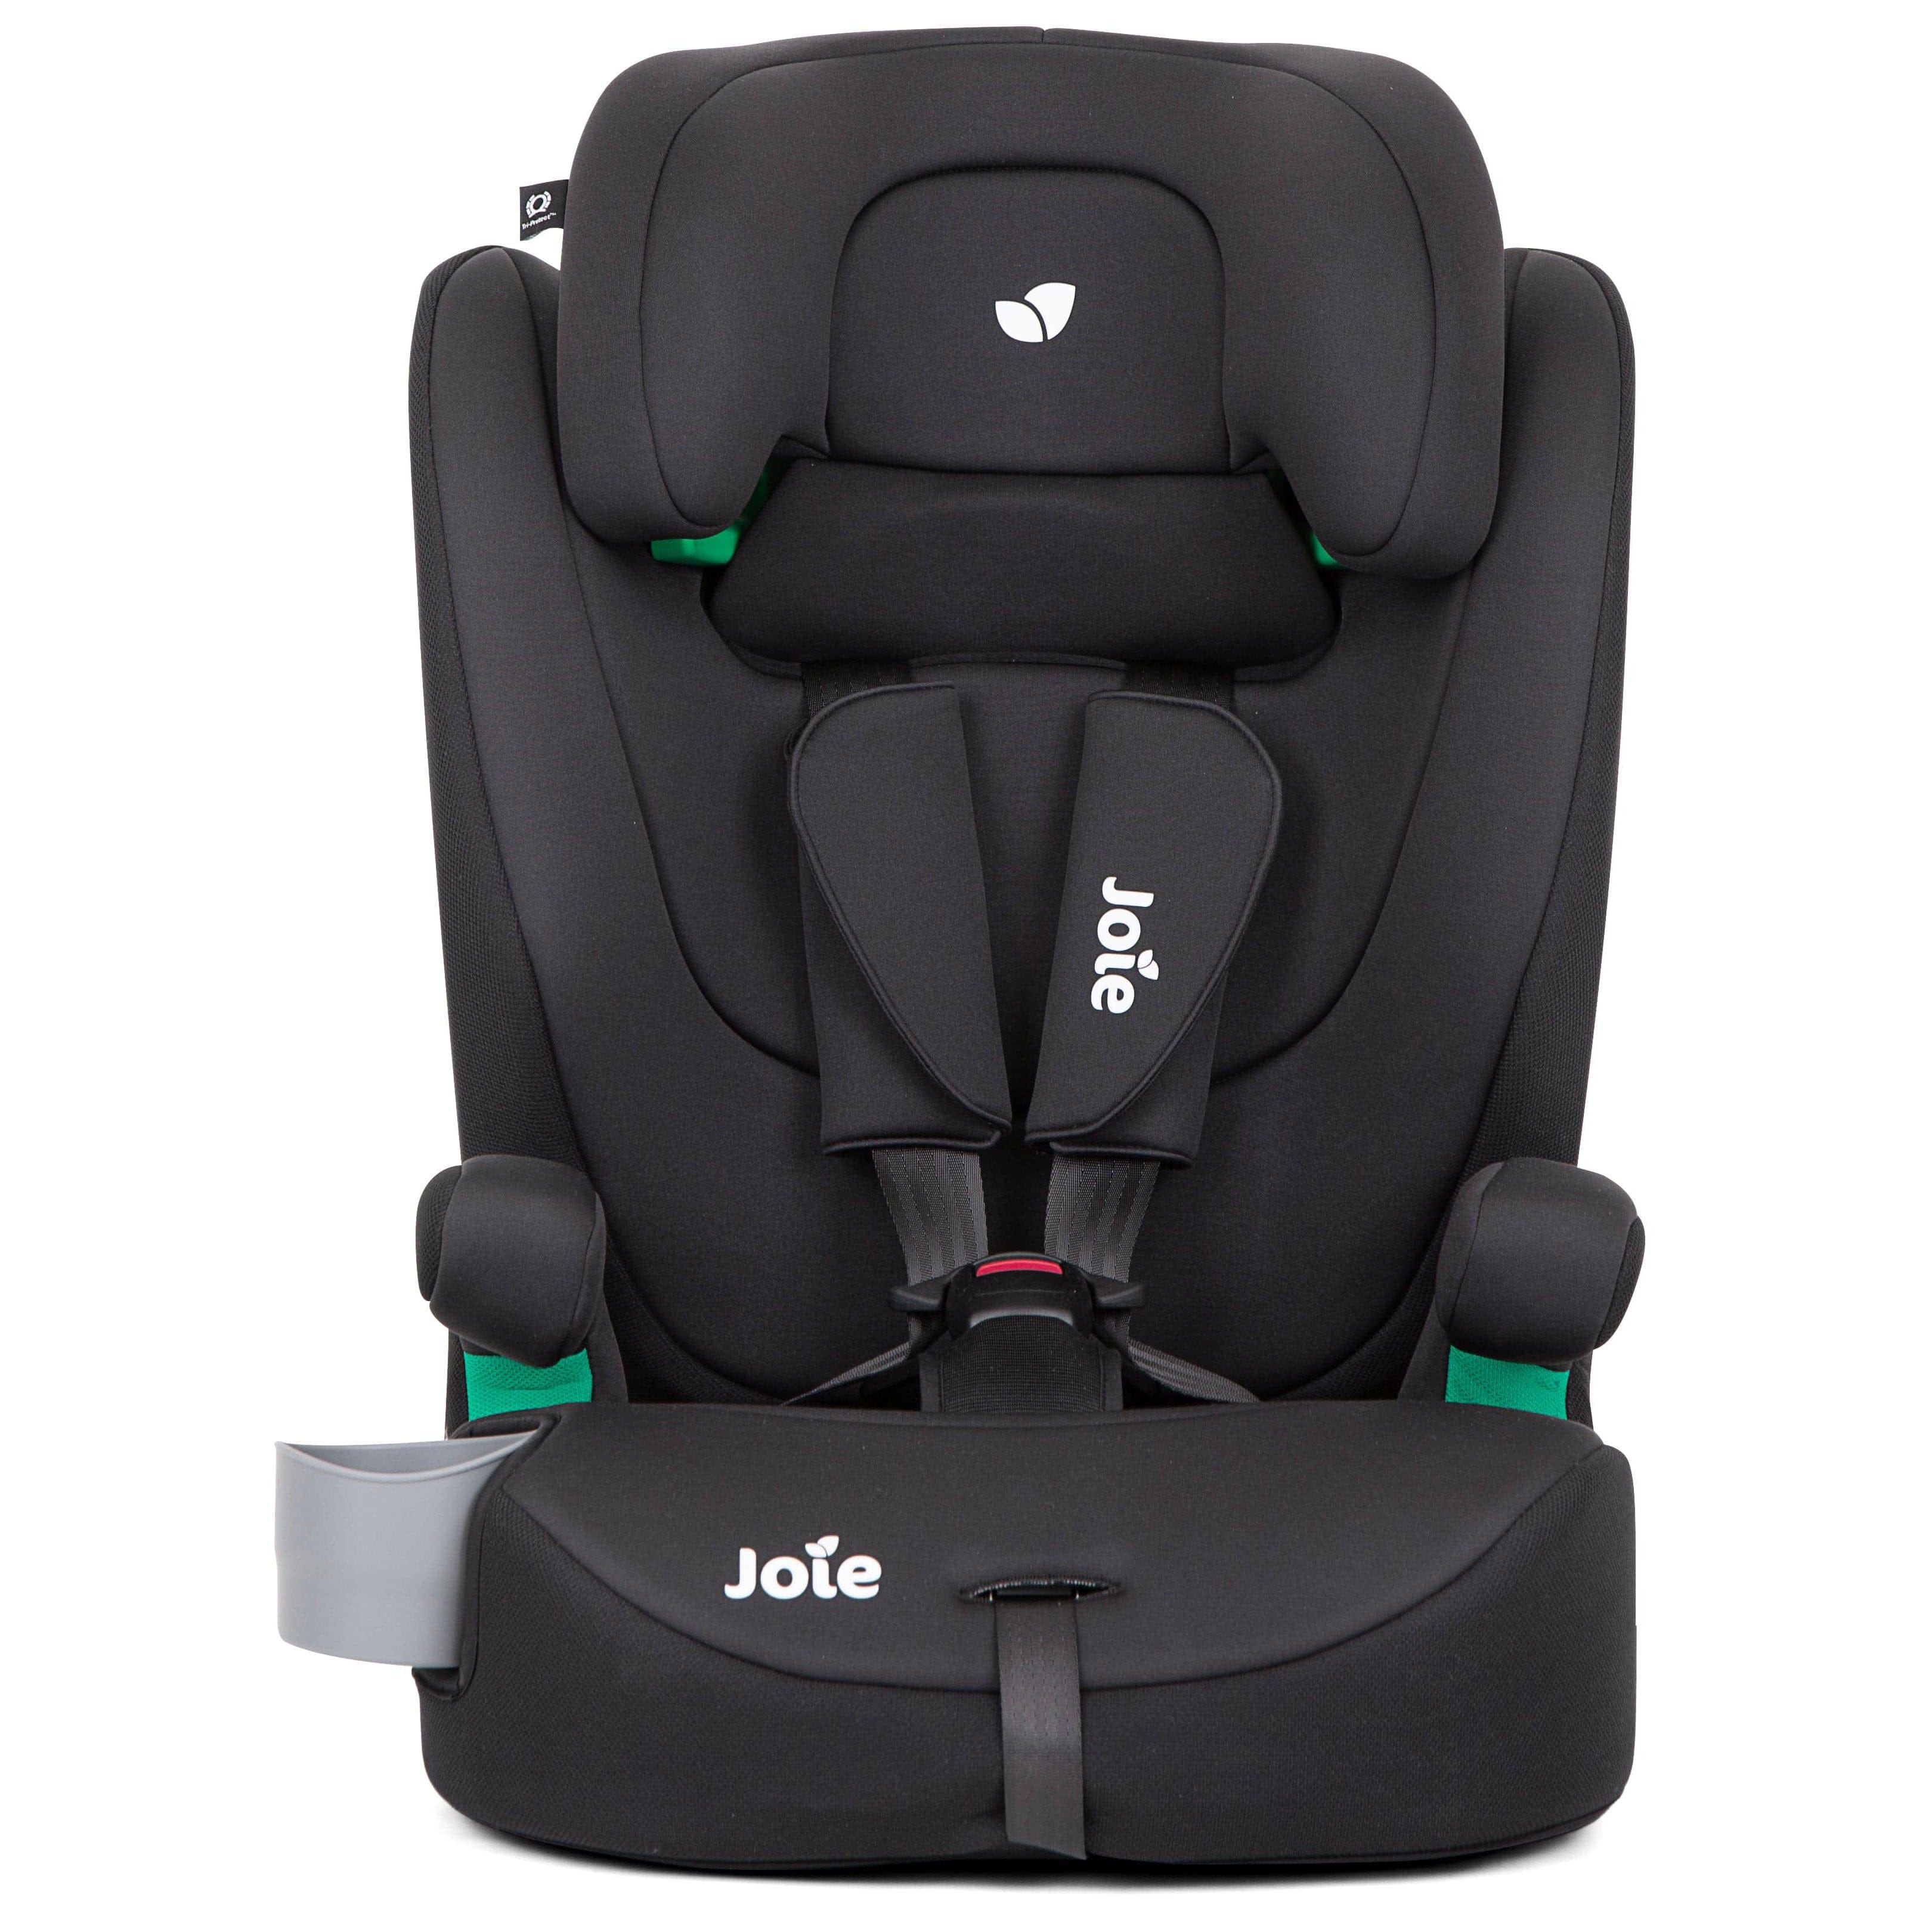 Joie combination car seats Joie Elevate R129 1/2/3 Car Seat - Shale C2216AASHA000